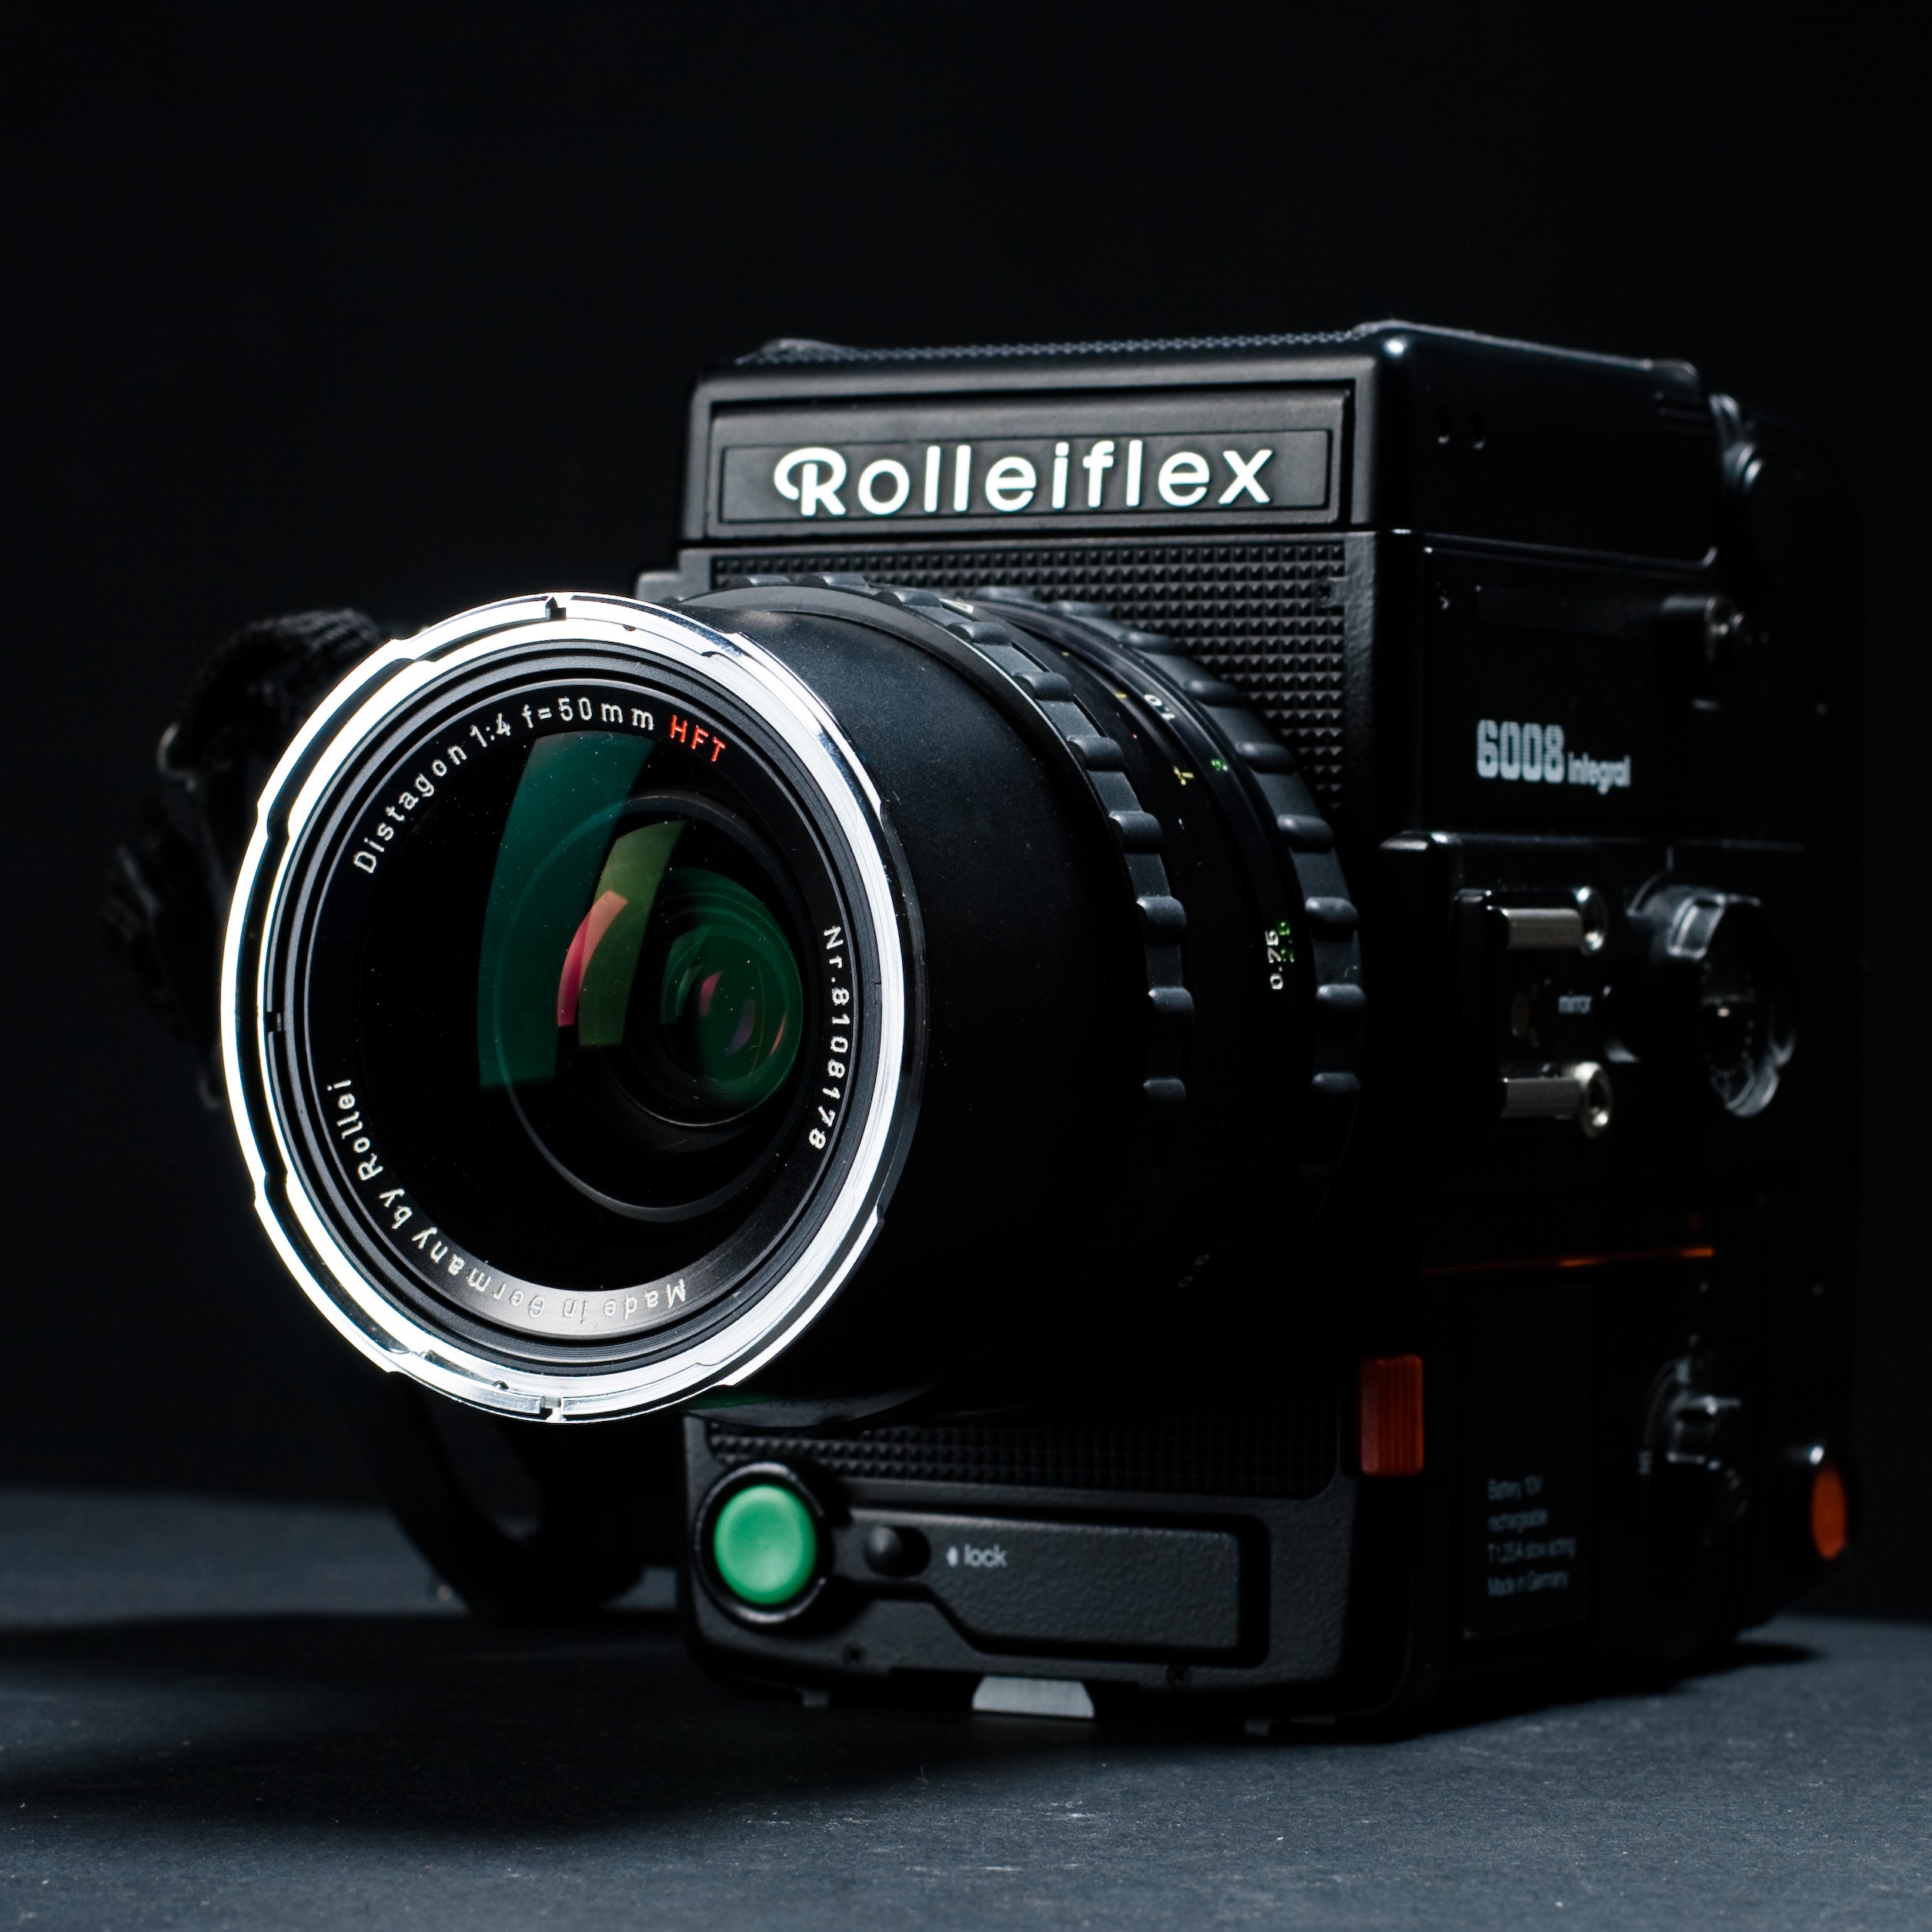 Black rolleiflex 6008 camera photo